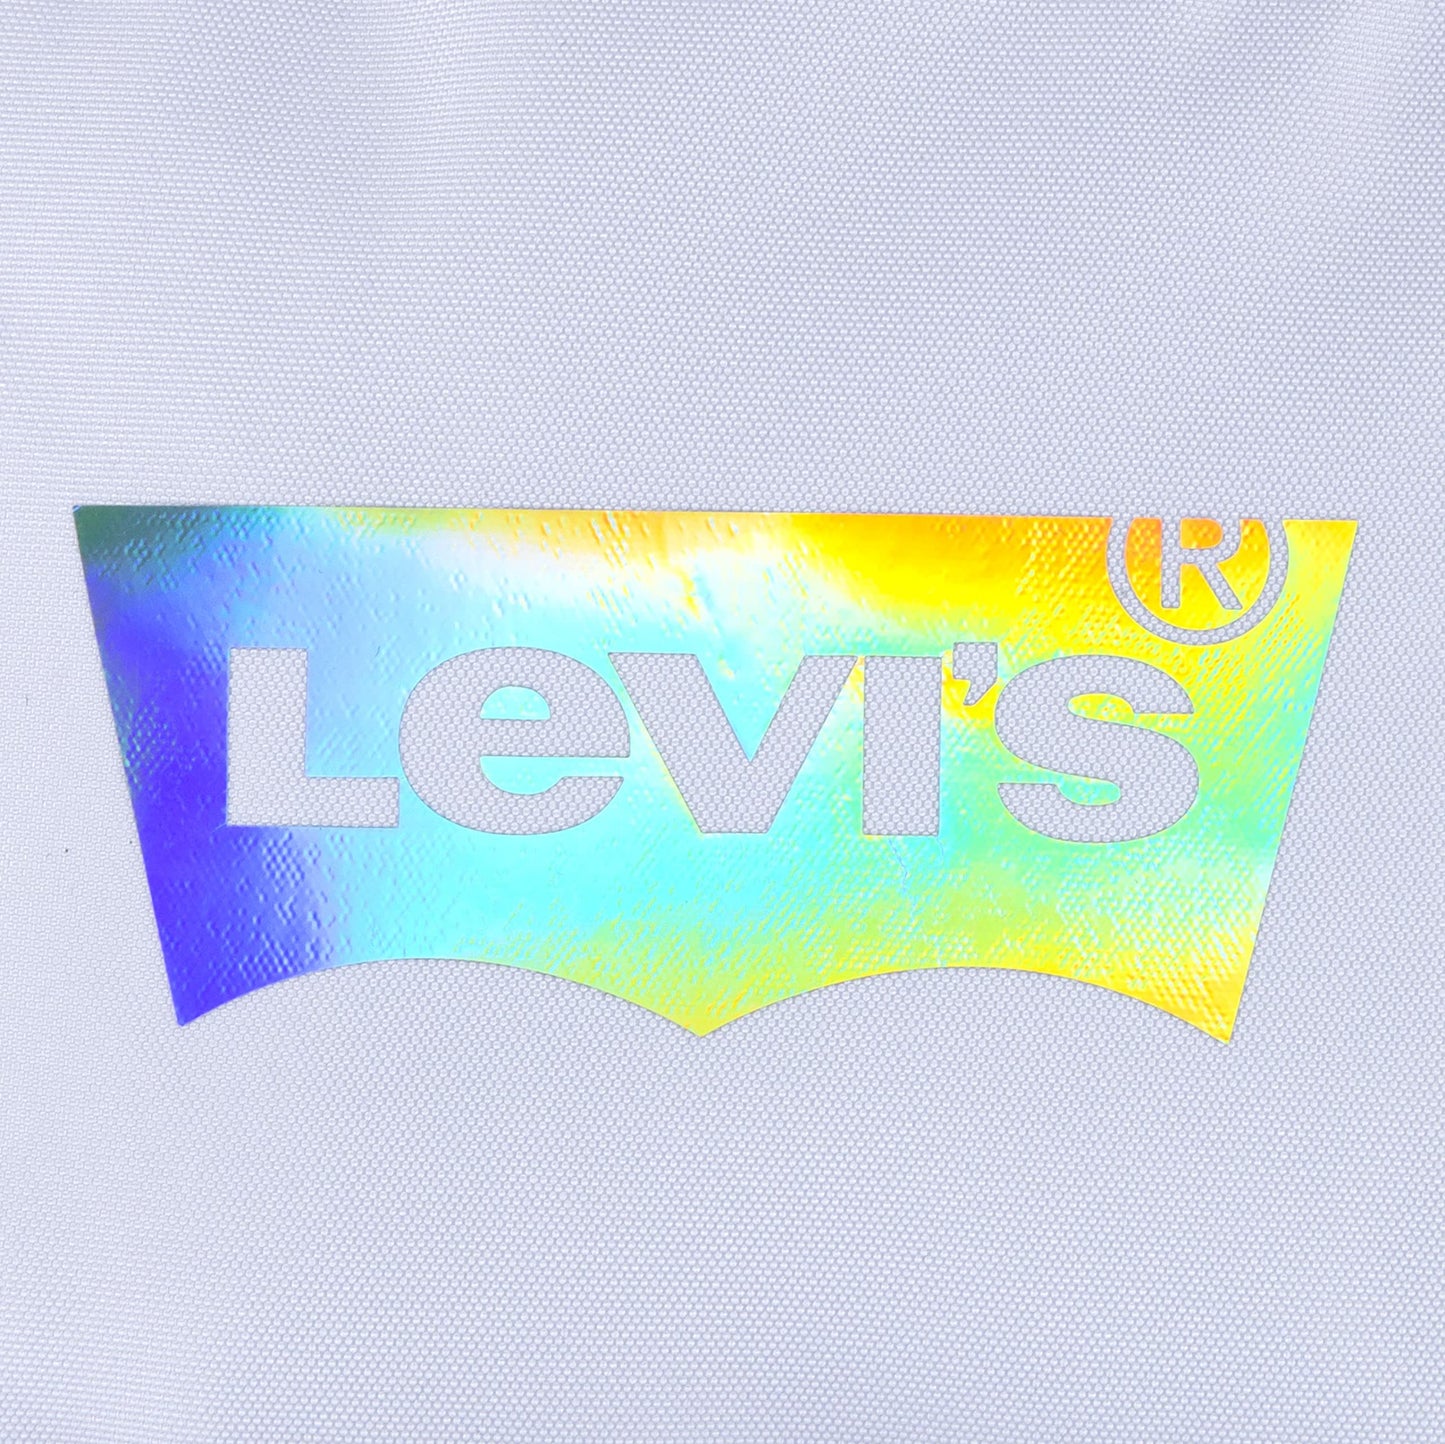 Levi's Unisex-Adult's Classic Logo Backpack